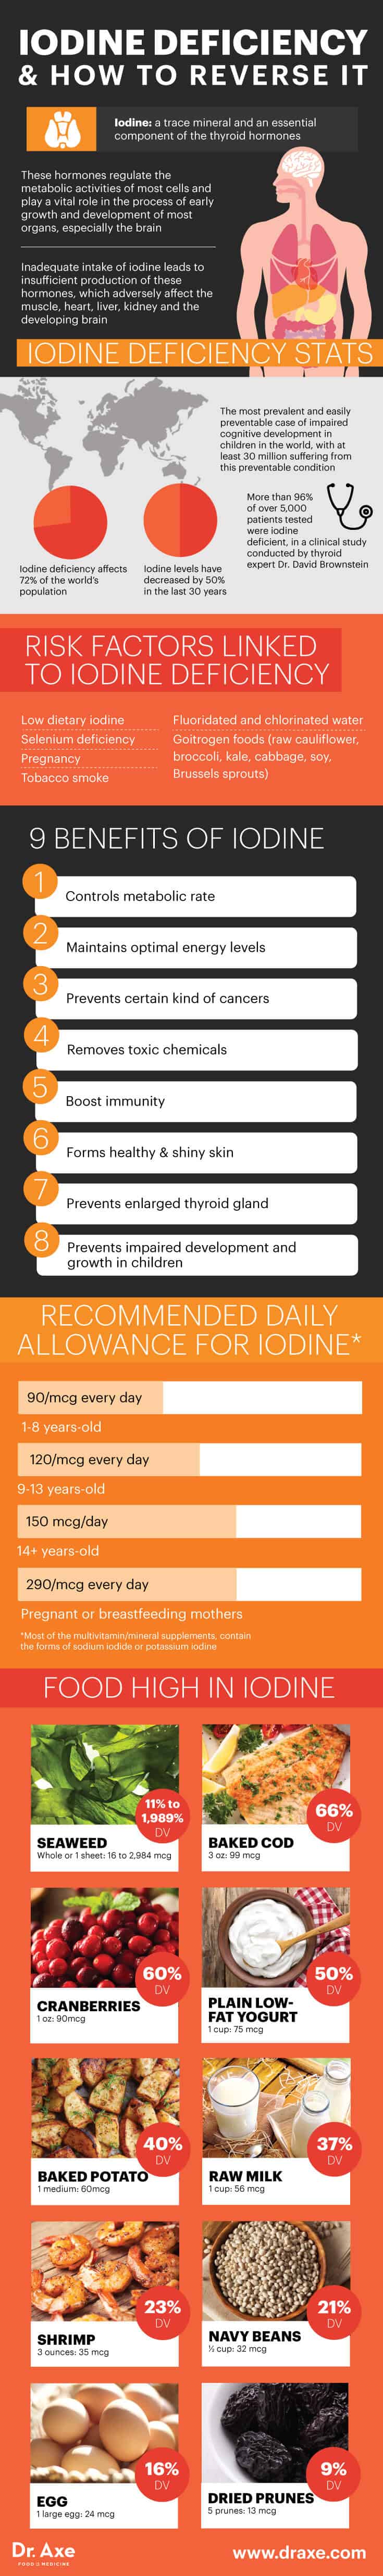 Iodine guide - Dr. Axe